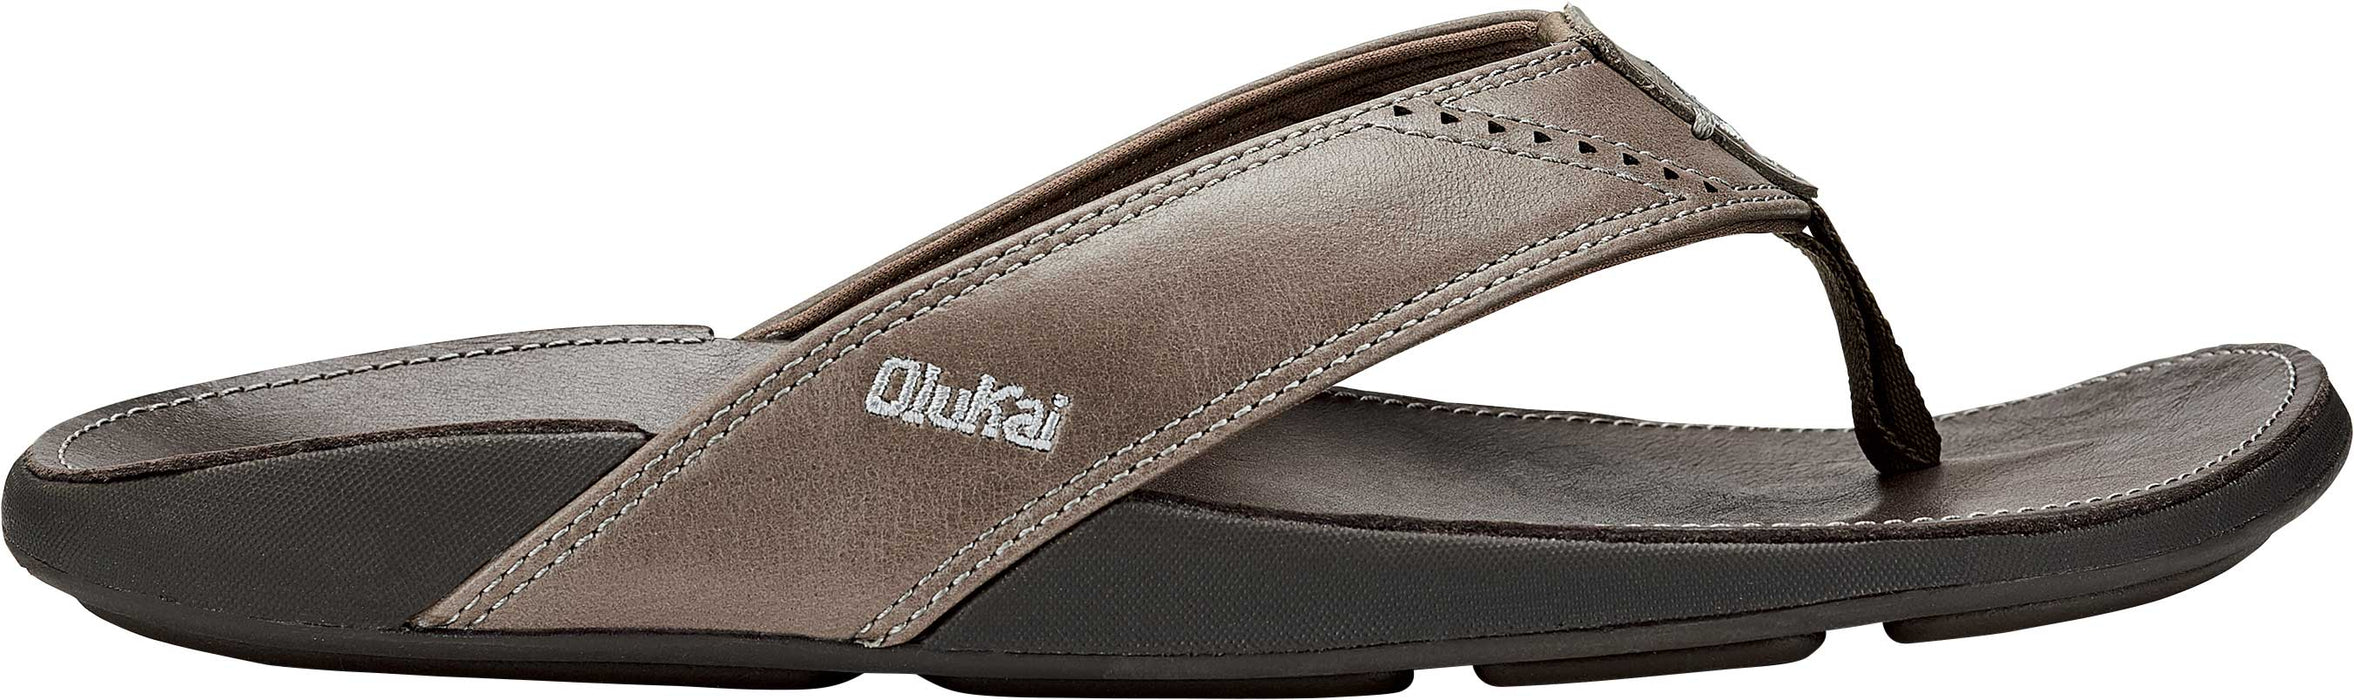 OluKai Men's Nui Leather Beach Sandals 2020